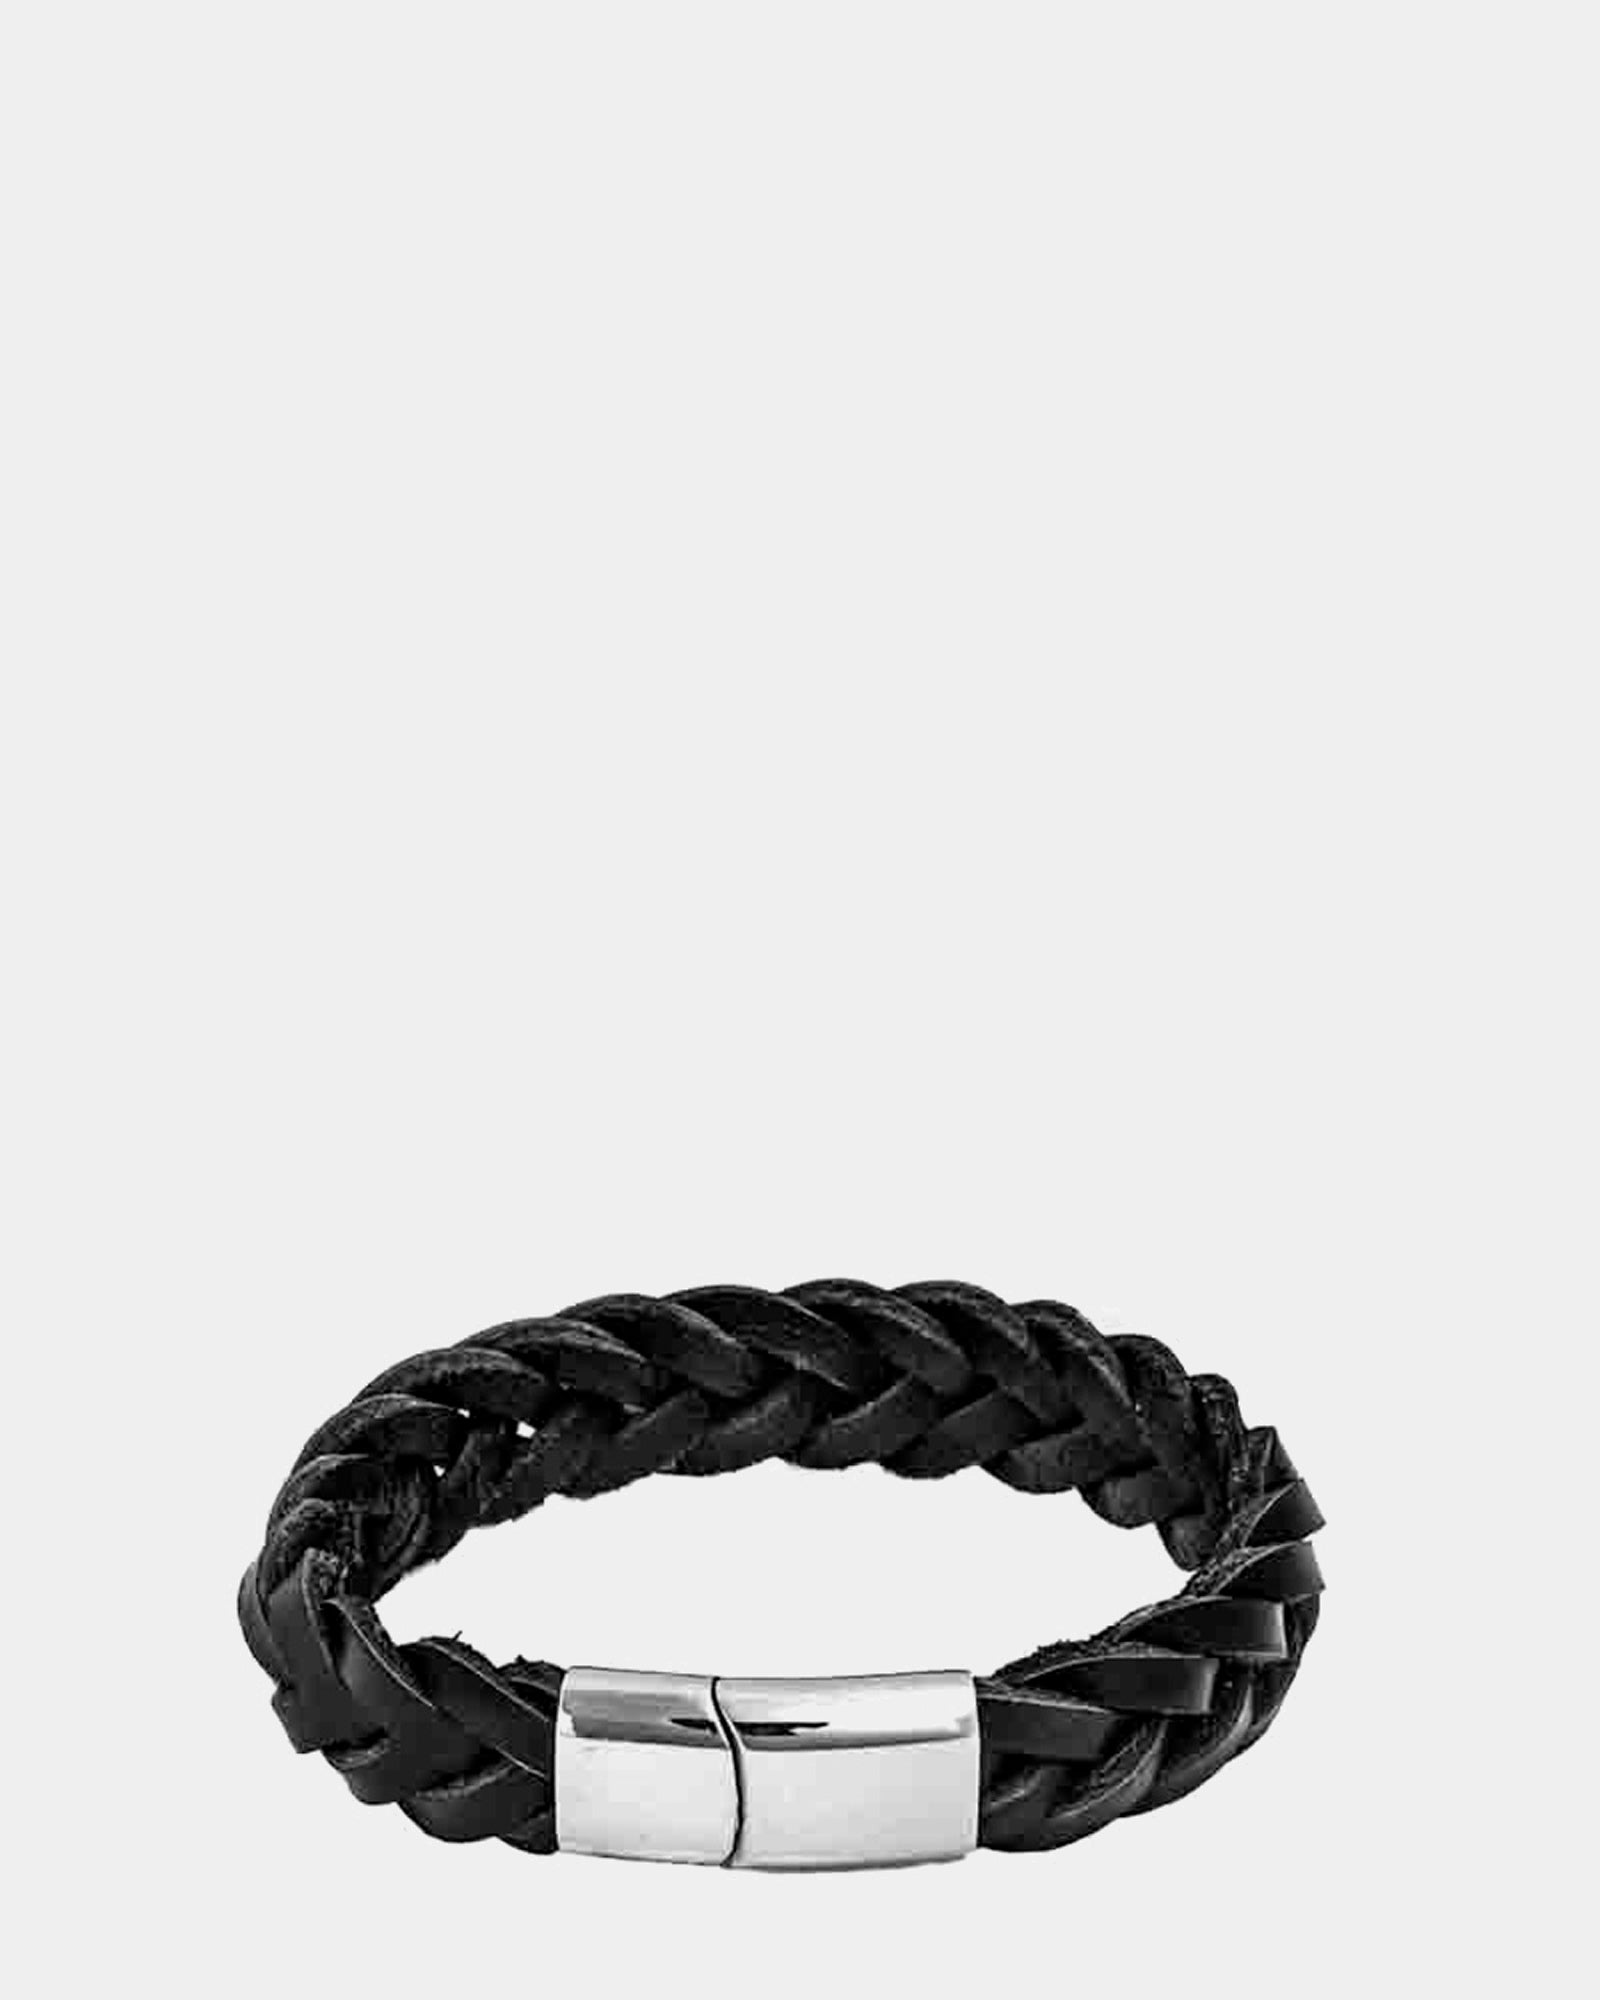 Black Leather Bracelet 'Biker' - Bracelets ManWoman - Dicci